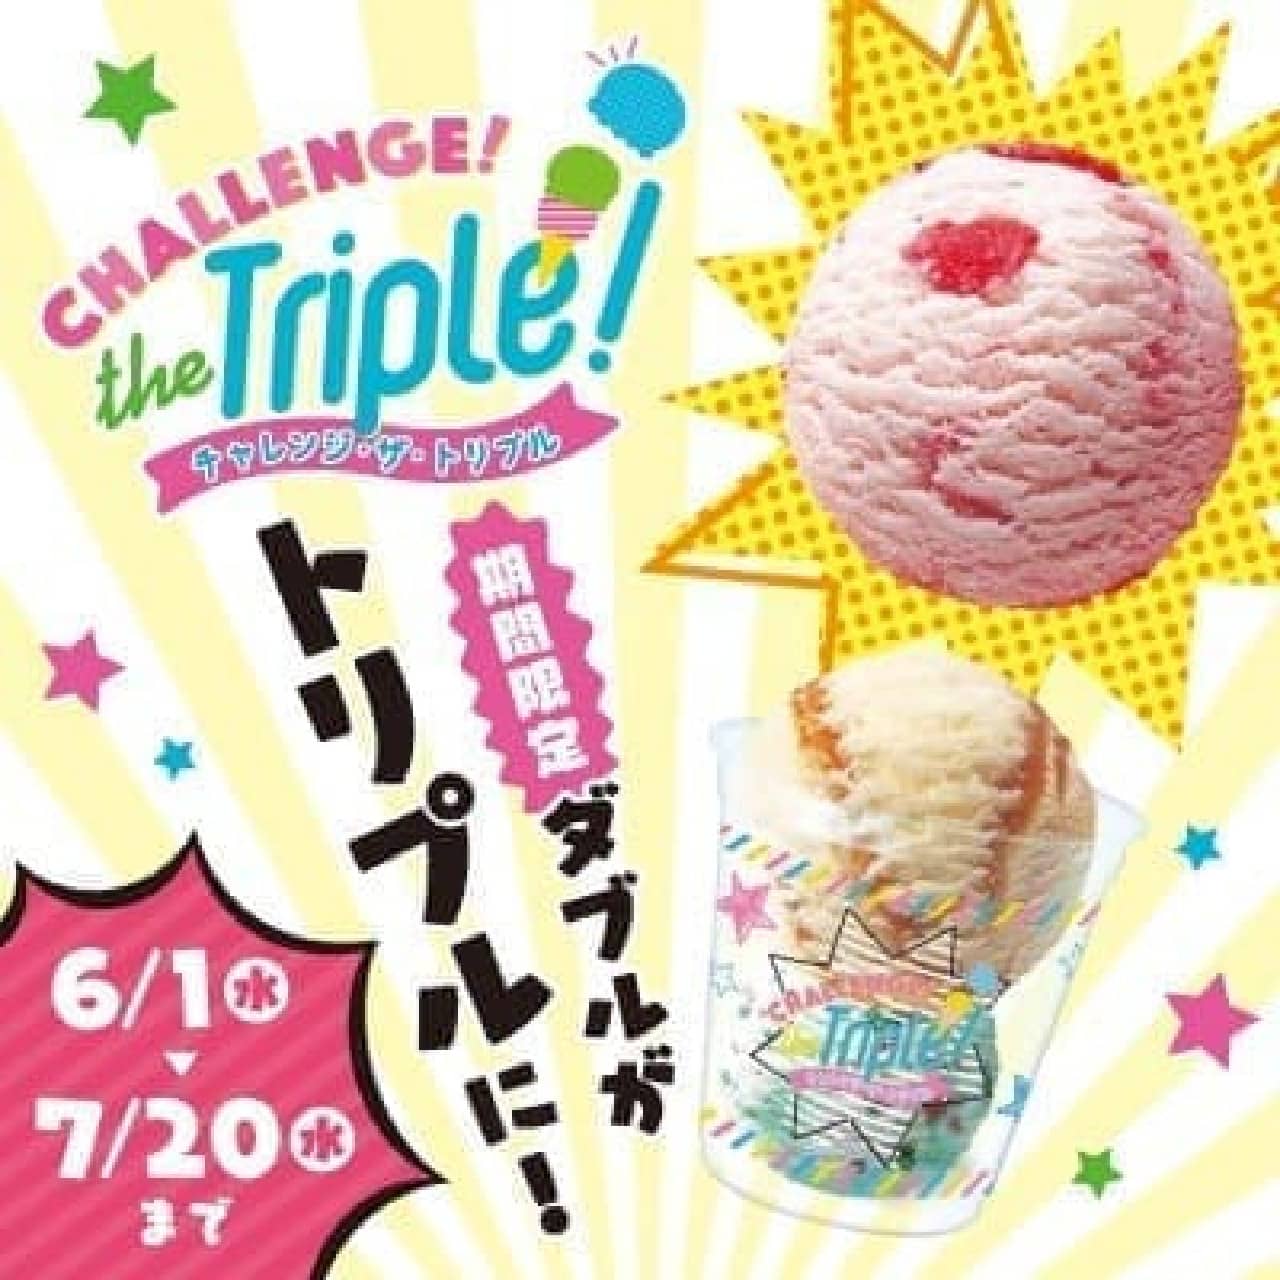 "Challenge the Triple" held